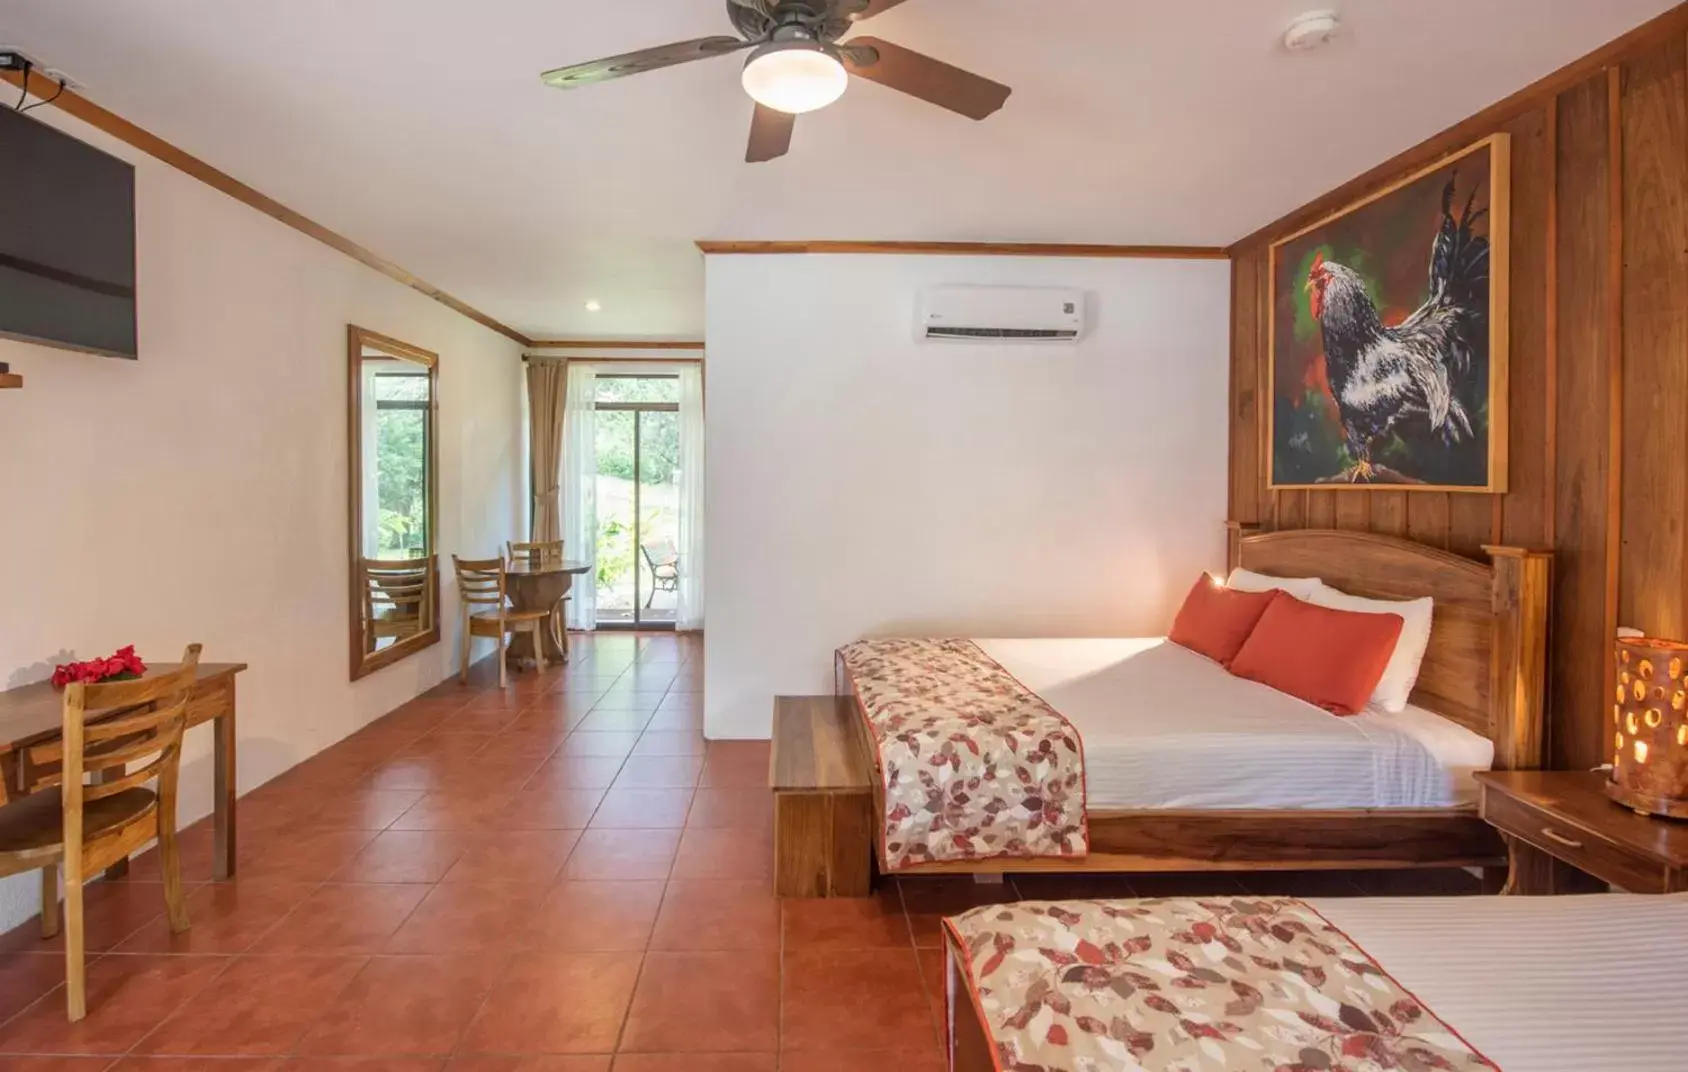 Photo of the whole room in Hacienda Guachipelin Volcano Ranch Hotel & Hot Springs